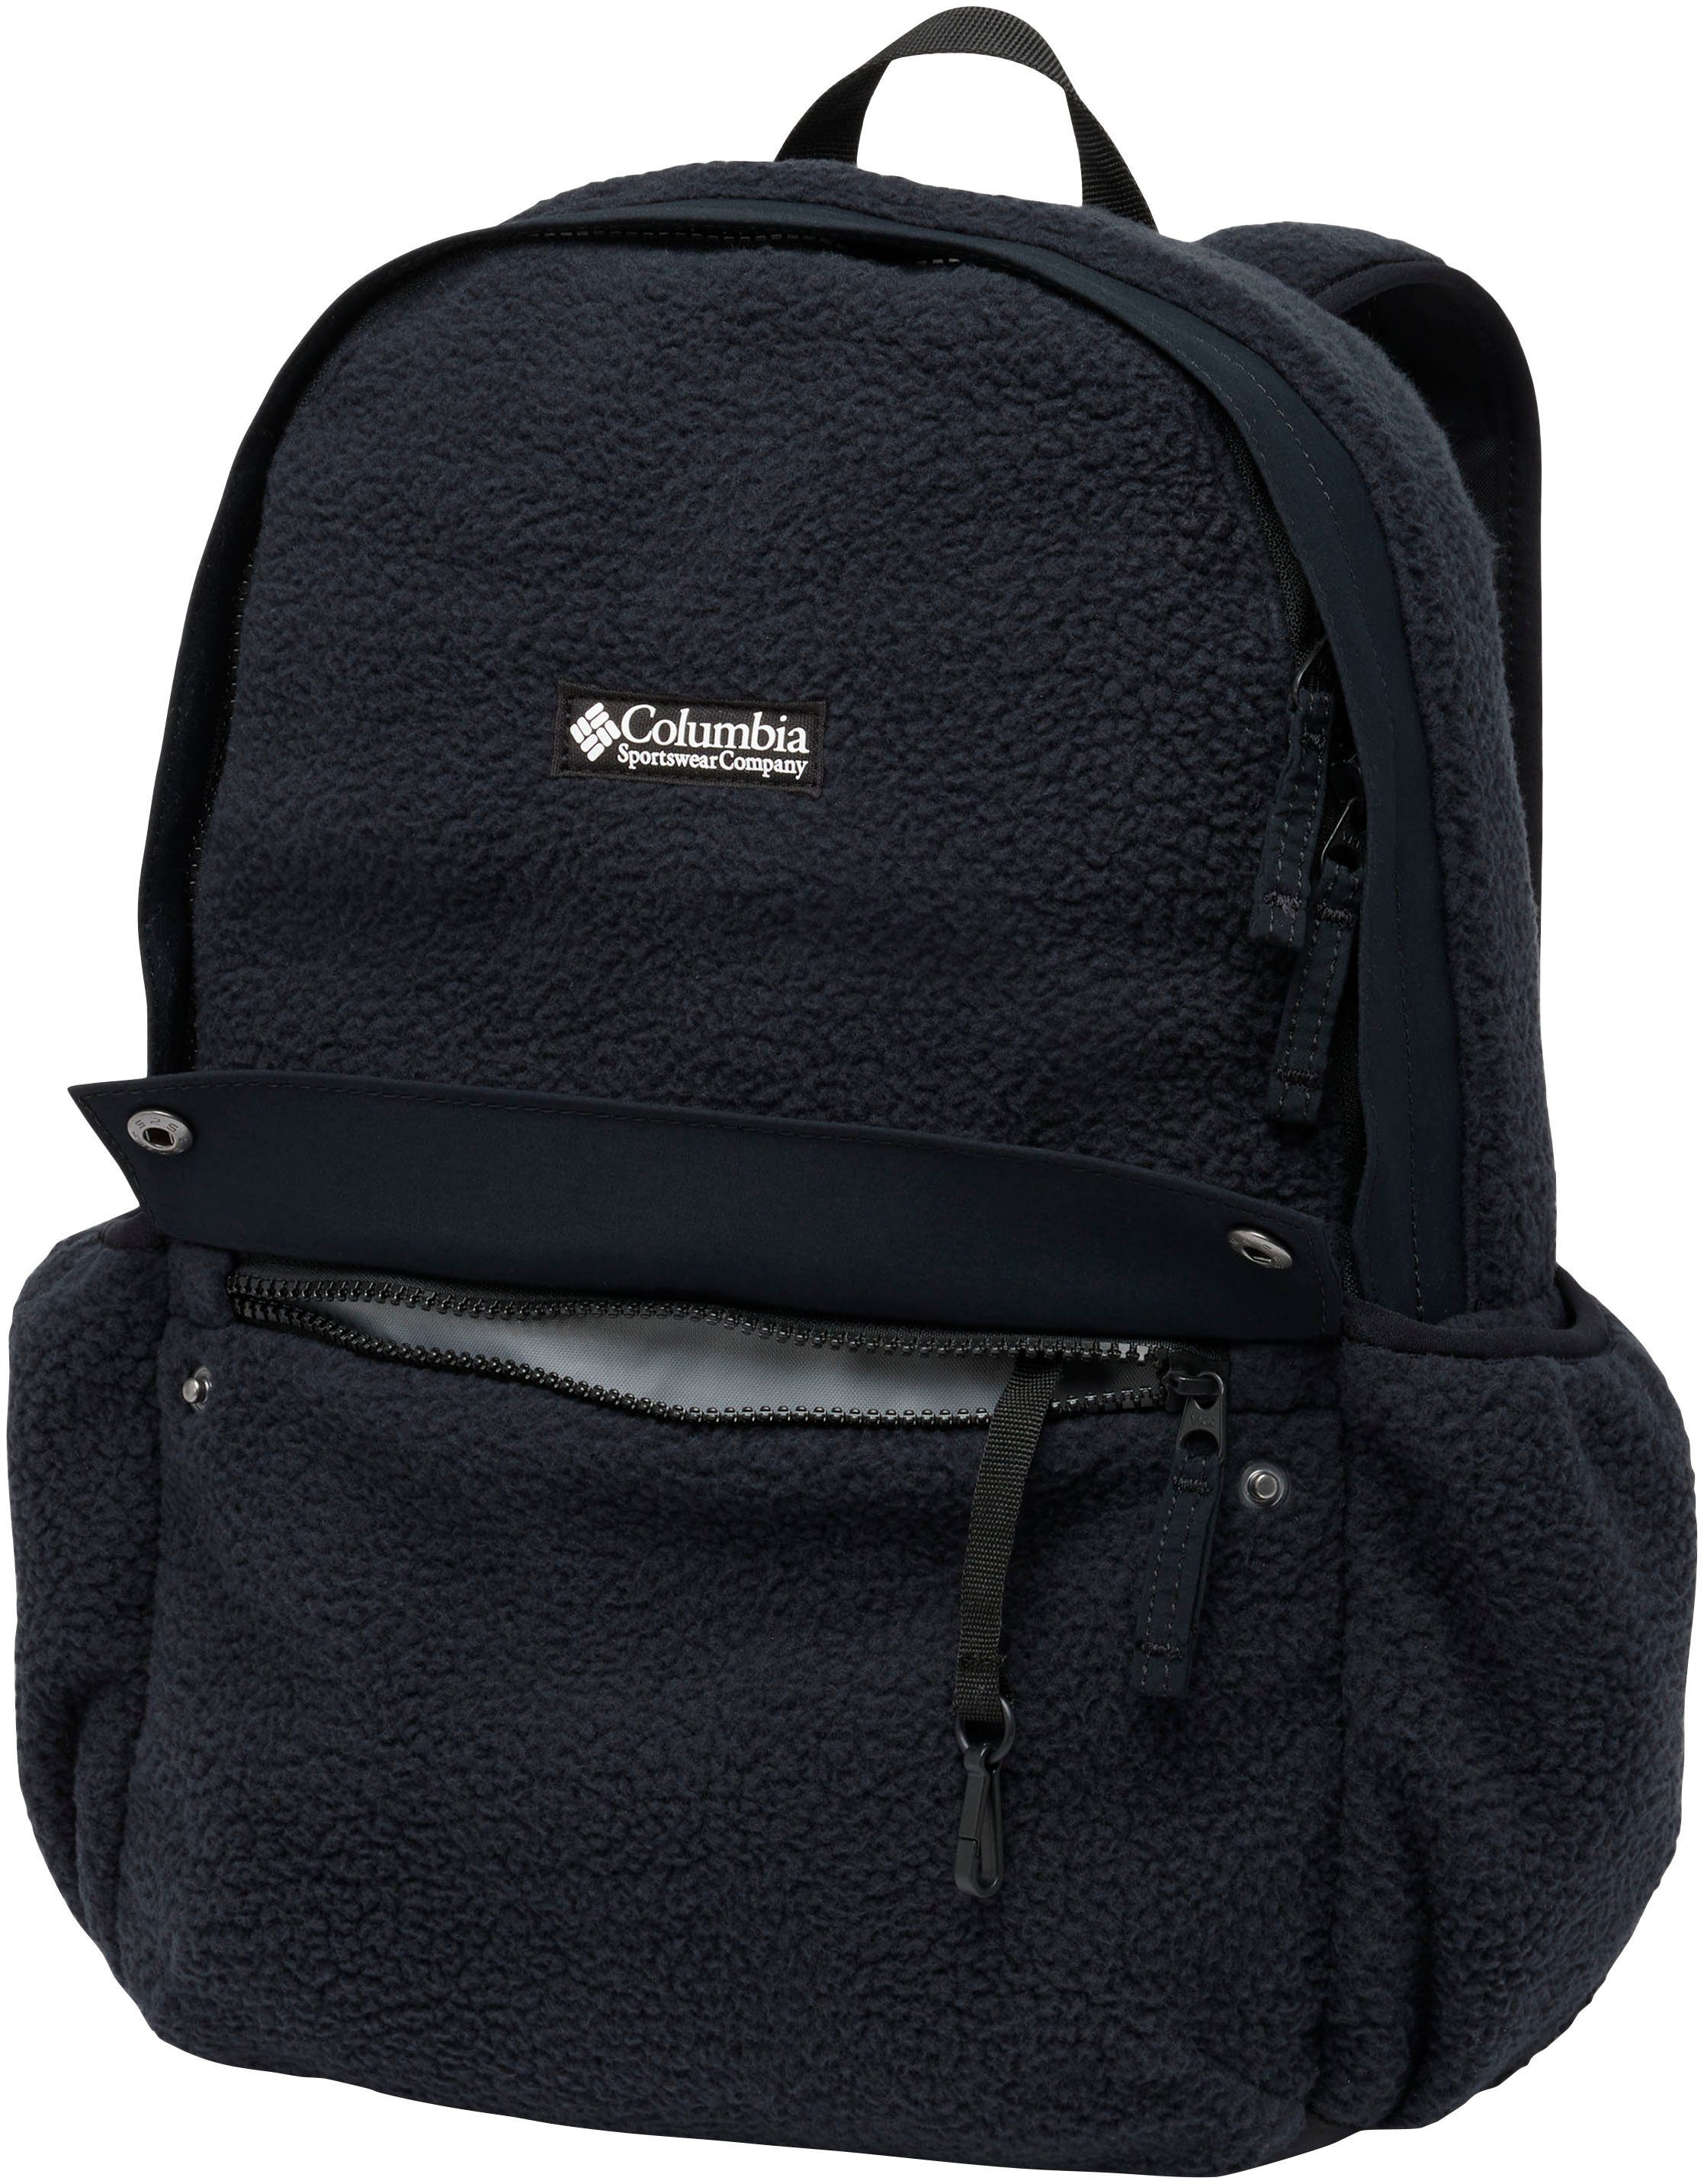 Columbia Rucksack Helvetia Black 14L Backpack